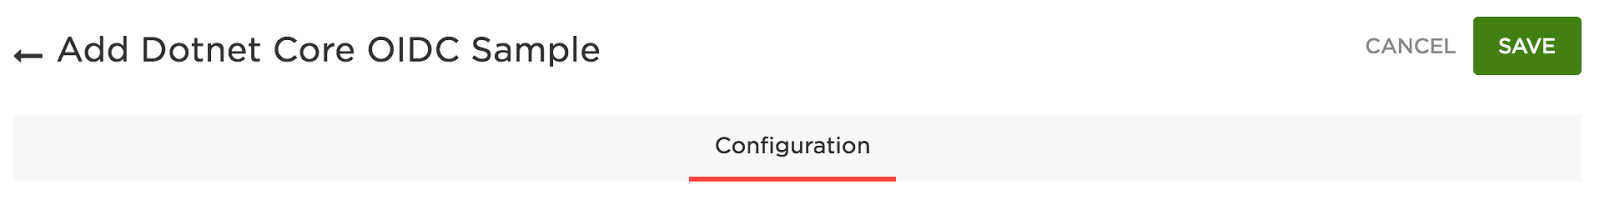 Configuration page